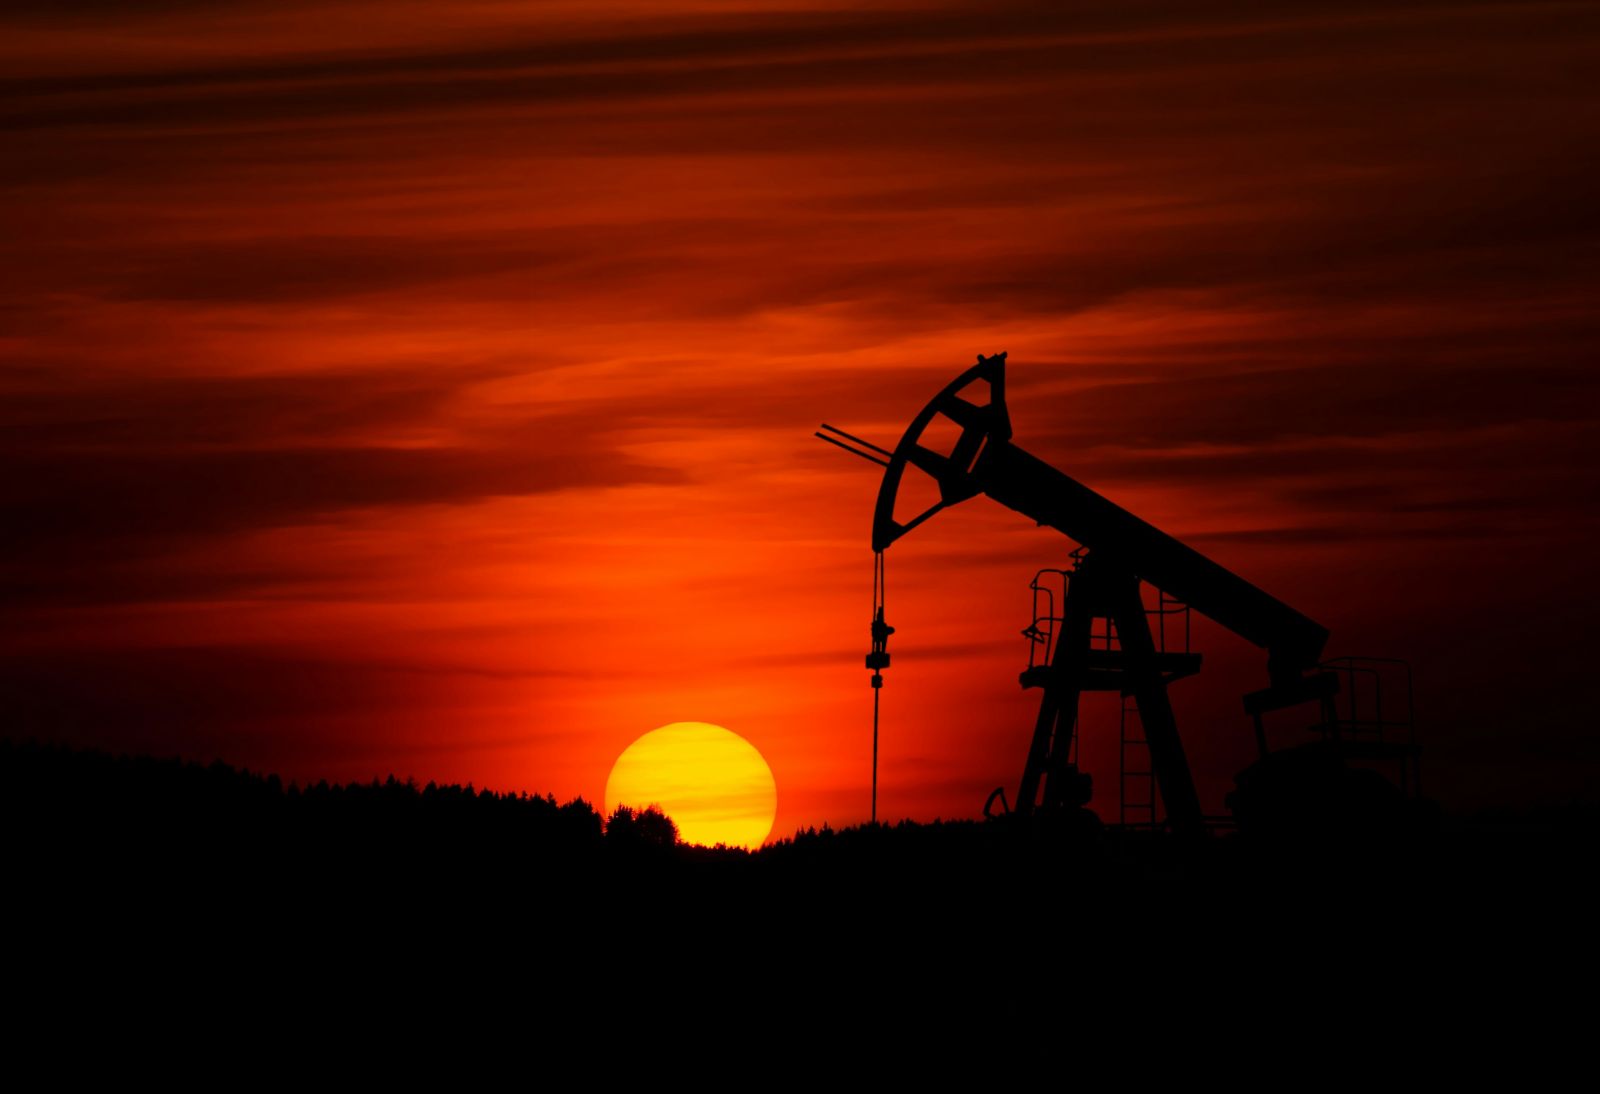 Oil - Crude Oil pumpjack at sunset by Zbynek Burival via Unsplash